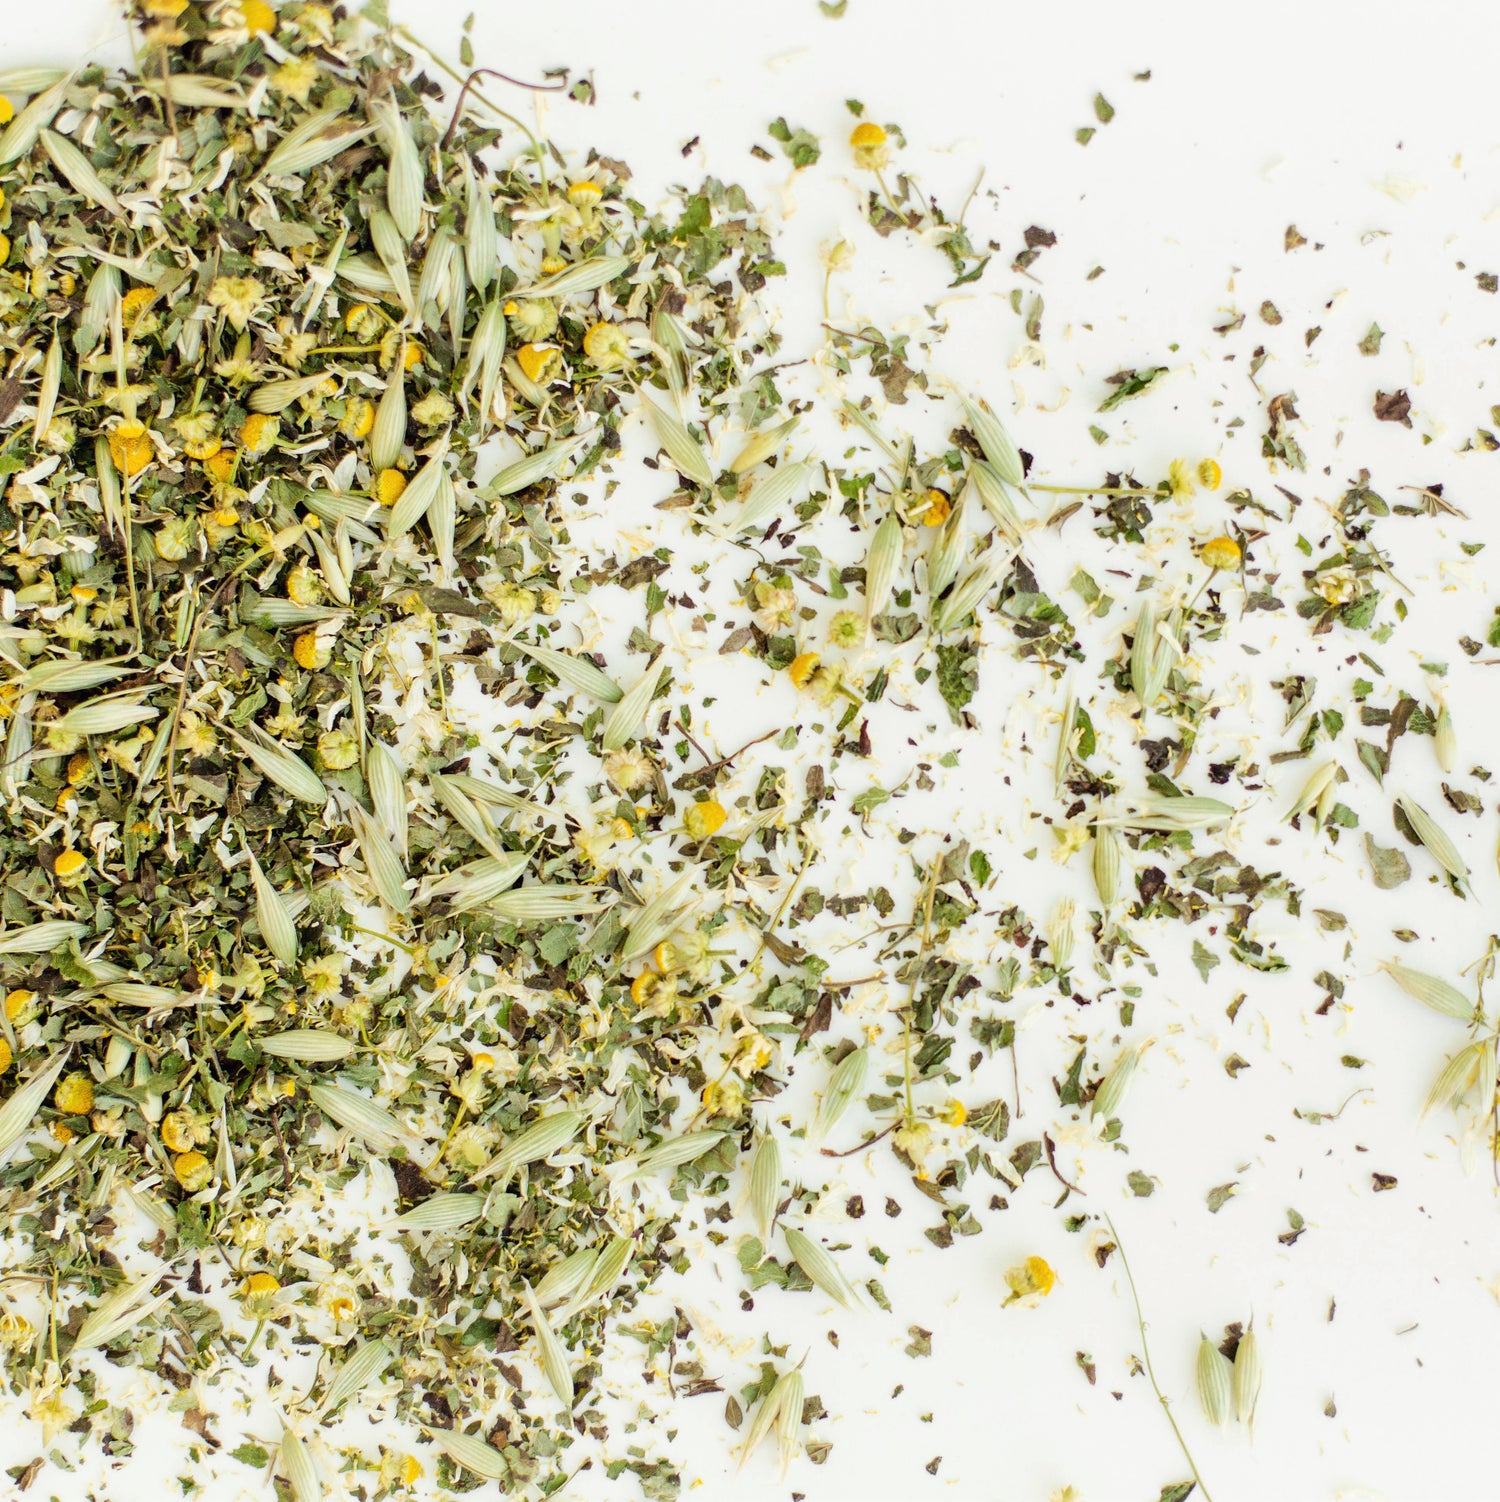 Moonbeam tea loose leaf herbs, herbal tea blend for rest and restoration